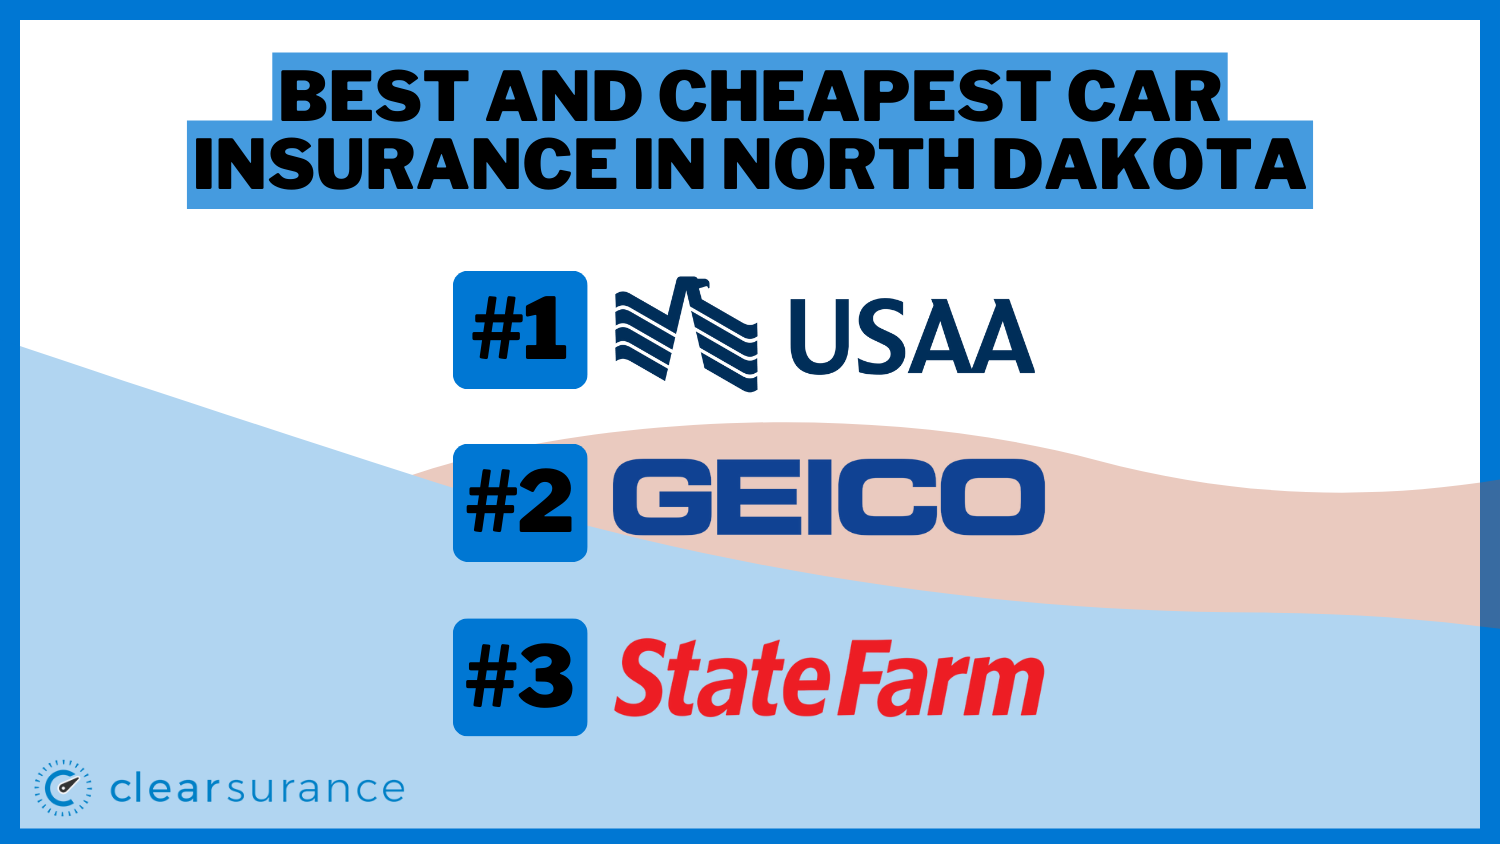 Best and Cheapest Car Insurance in North Dakota